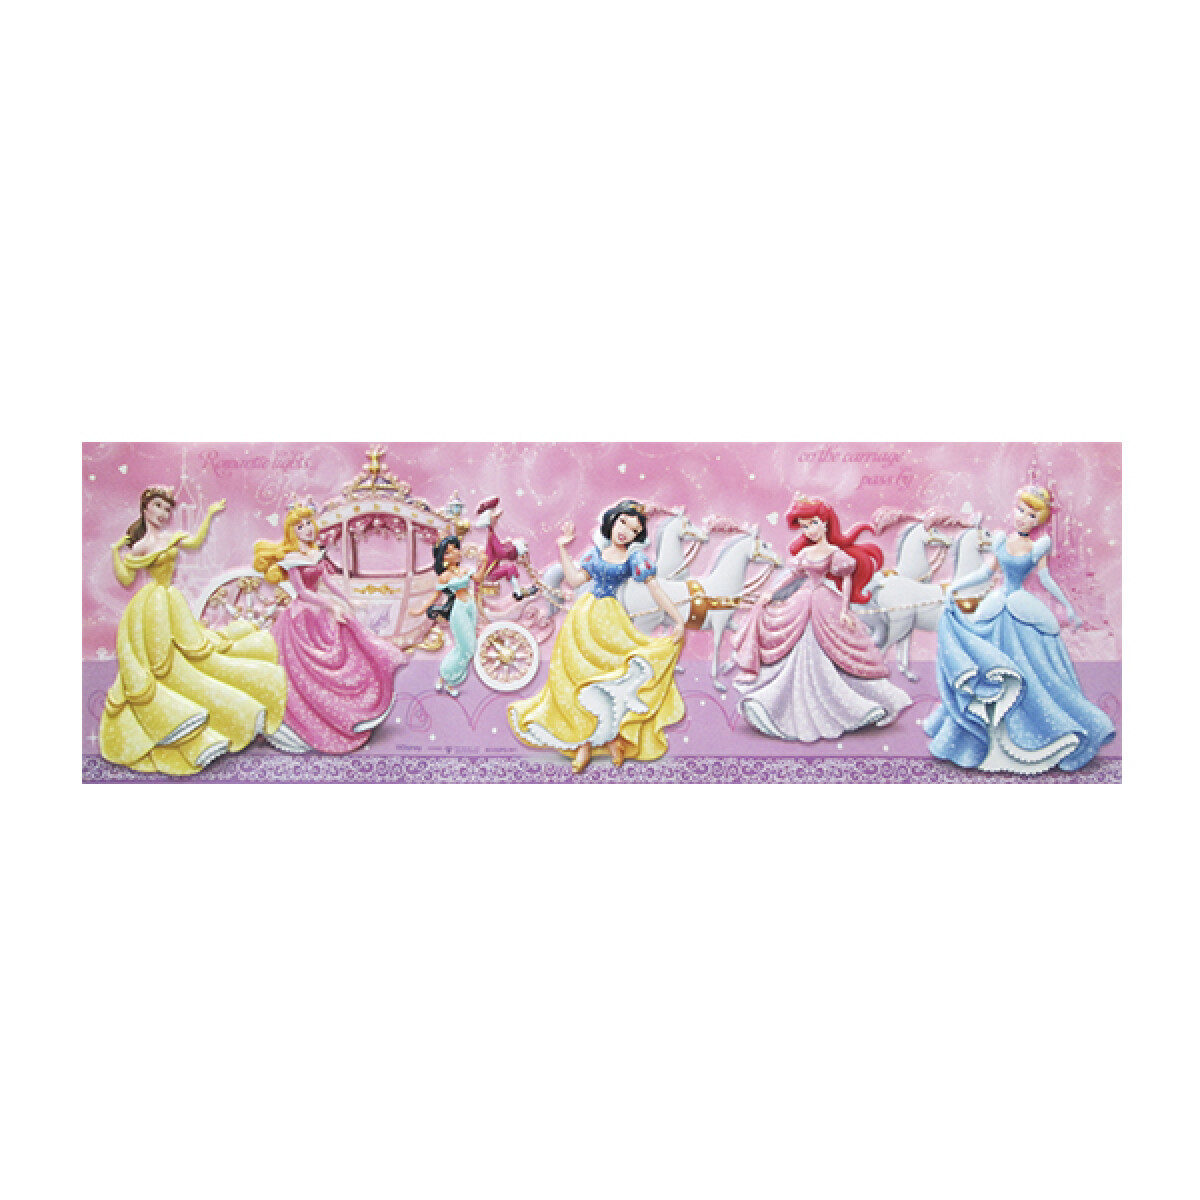 Guarda de Pared Decorativa Adhesiva Princesas Disney 